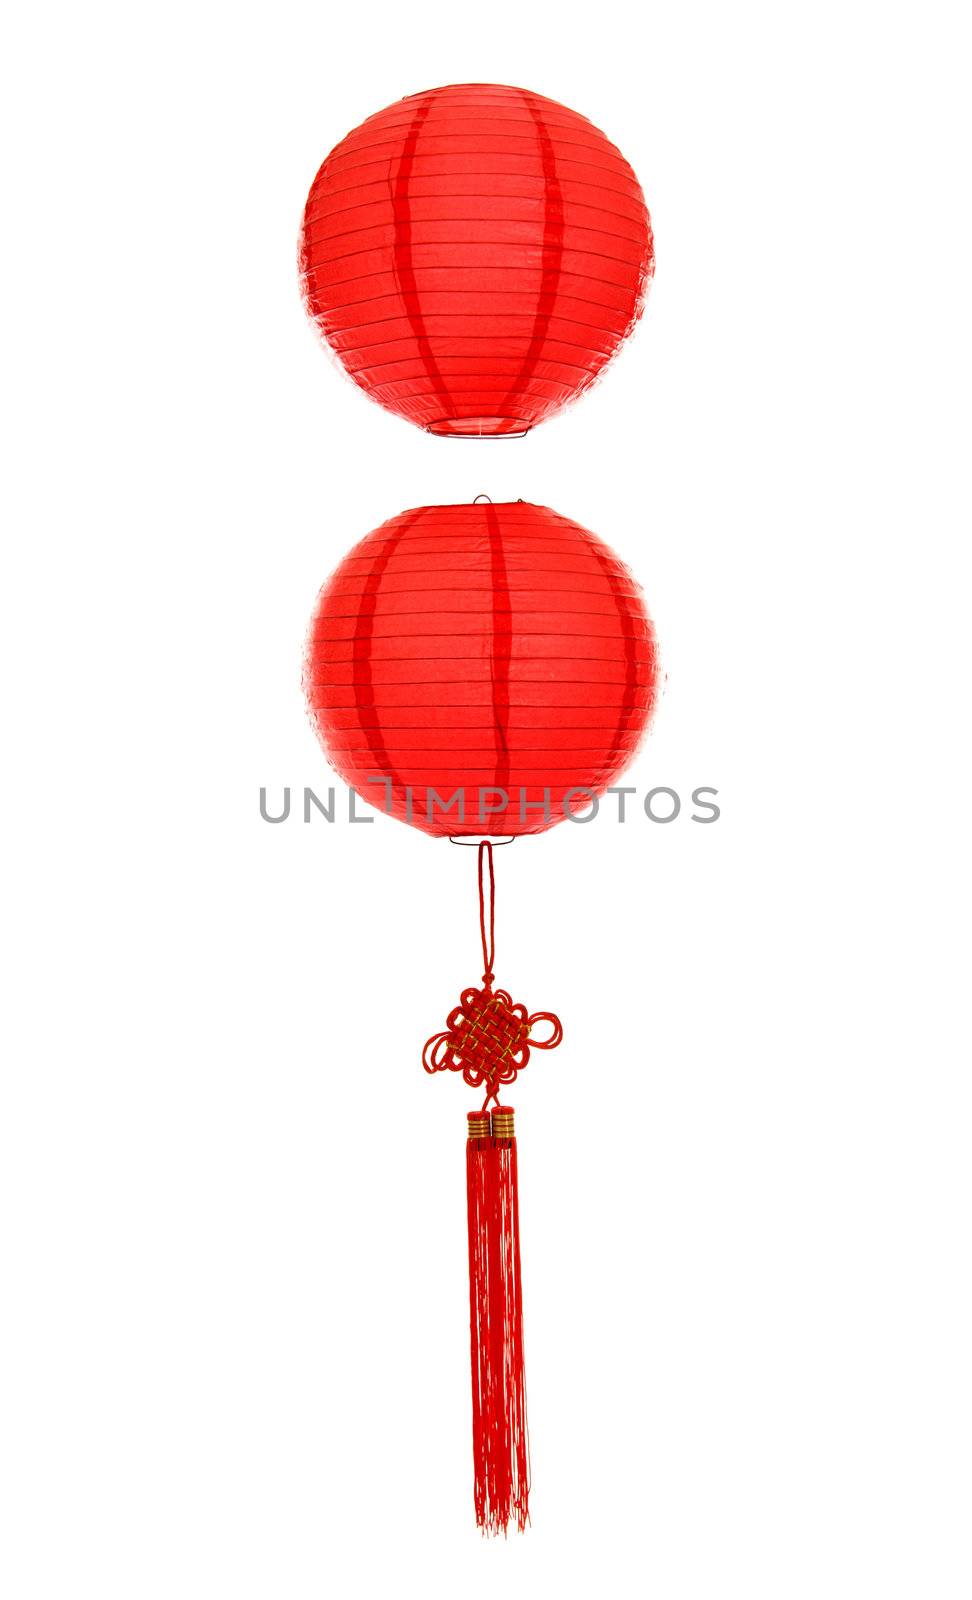 Chinese new year's lantern,isolated on white.